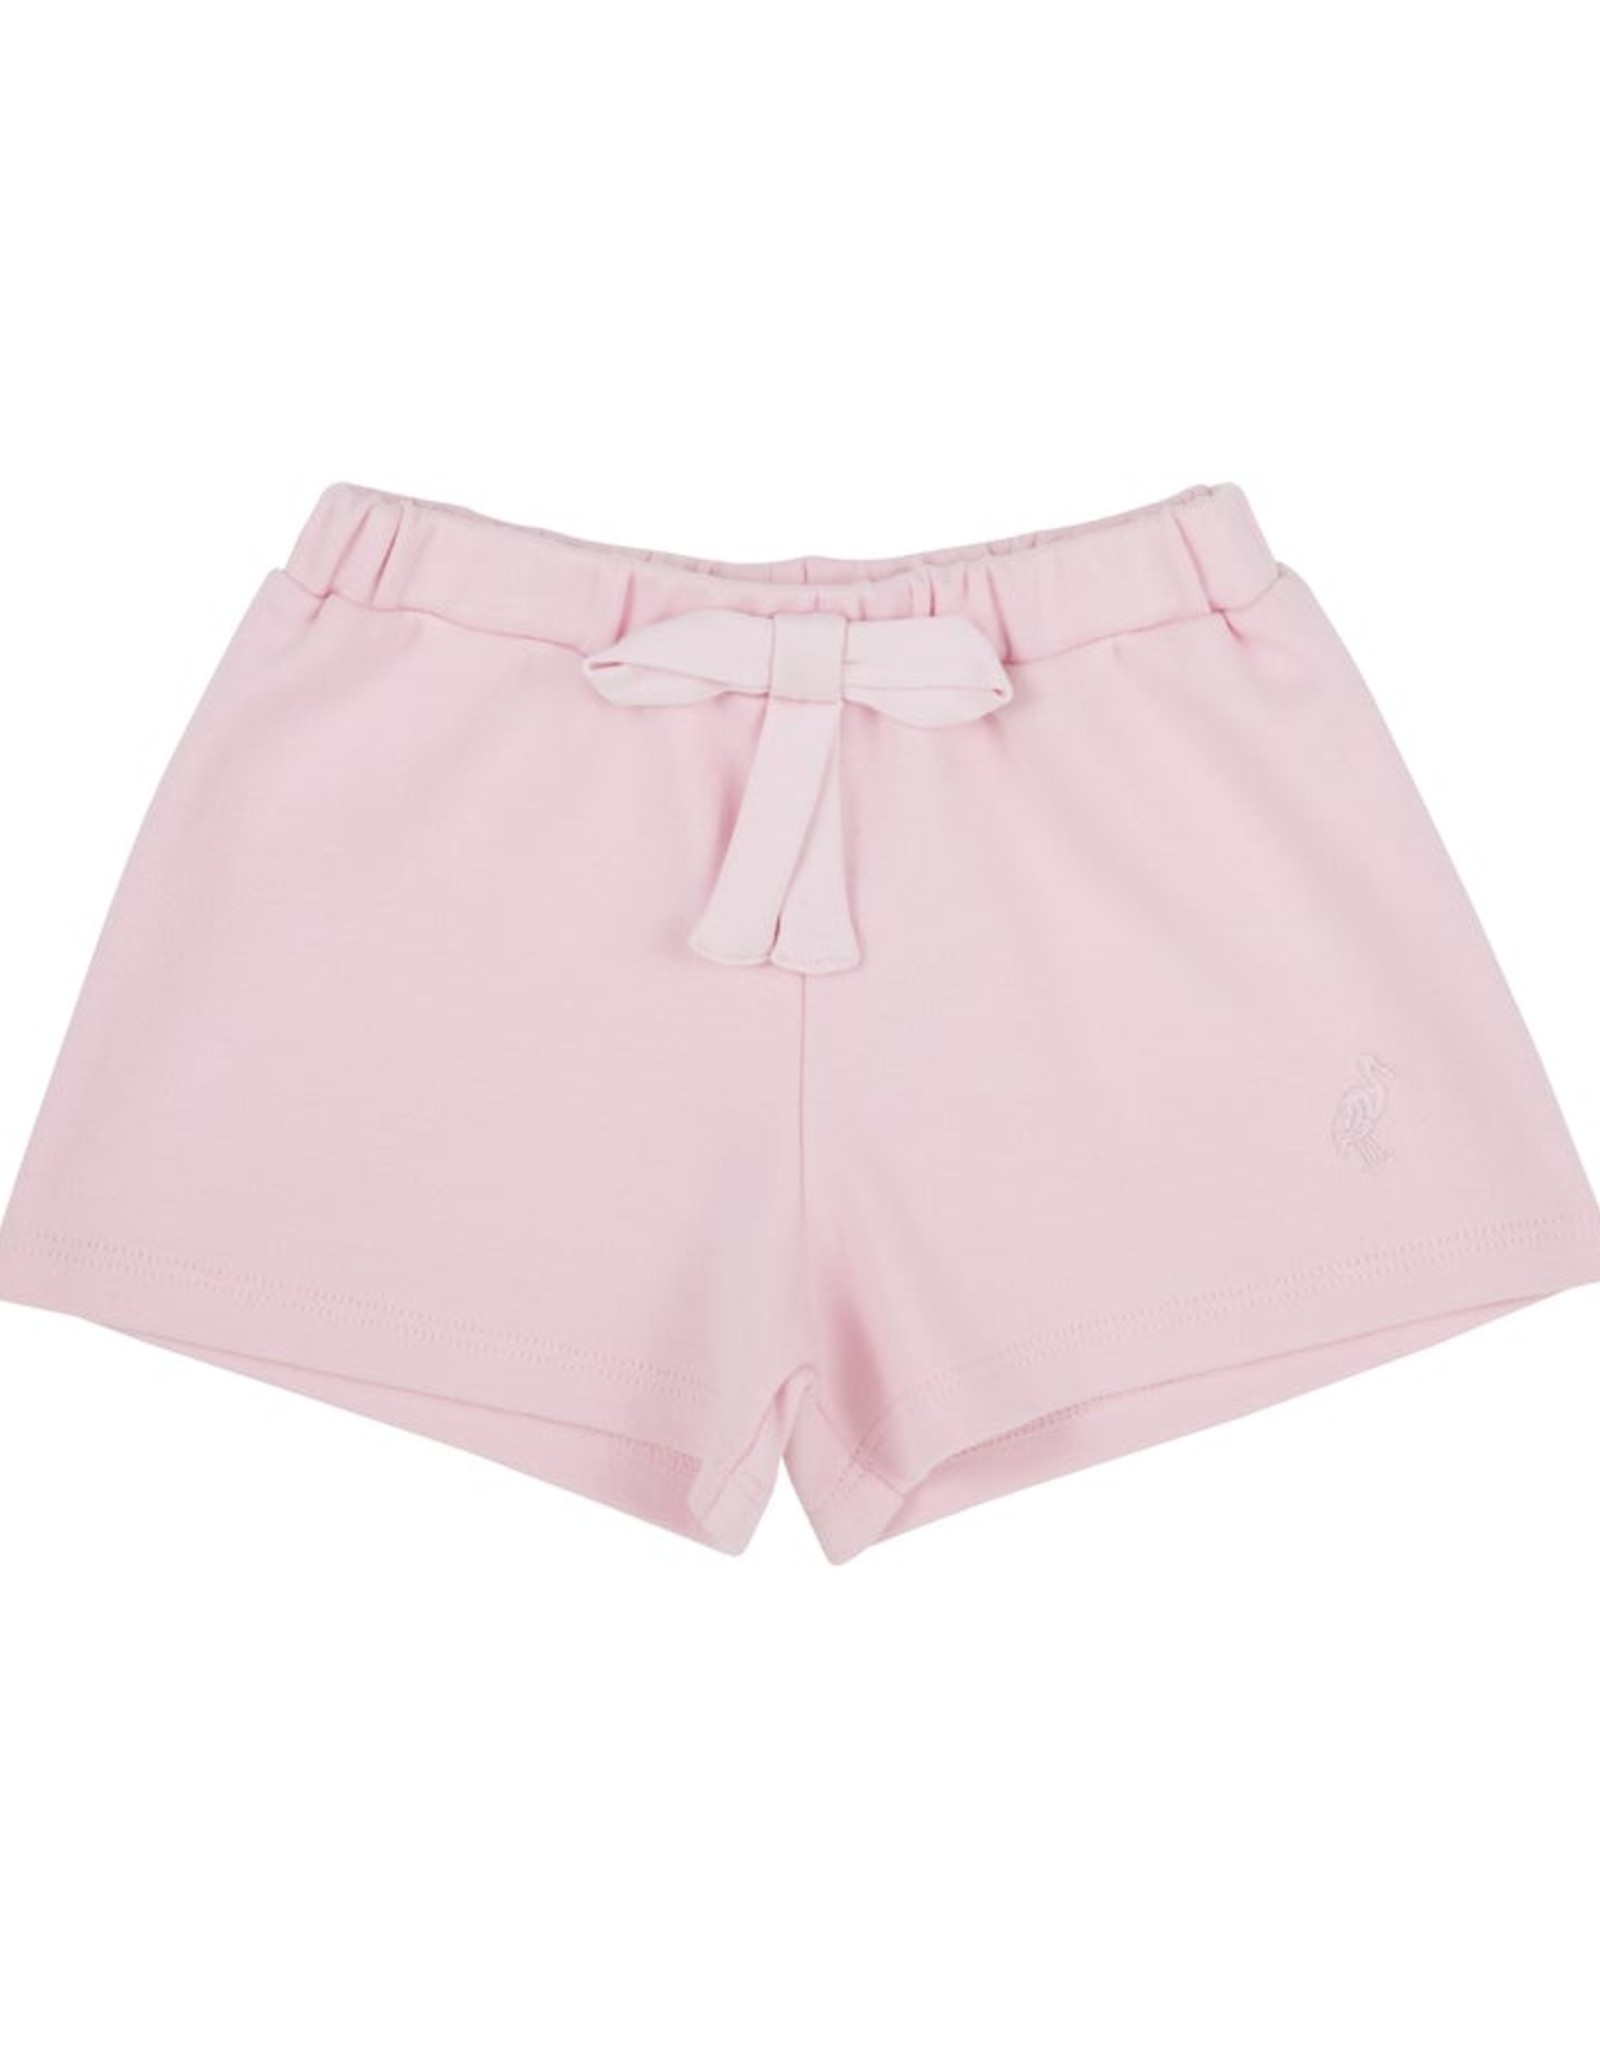 The Beaufort Bonnet Company Shipley Shorts, Palm Beach Pink